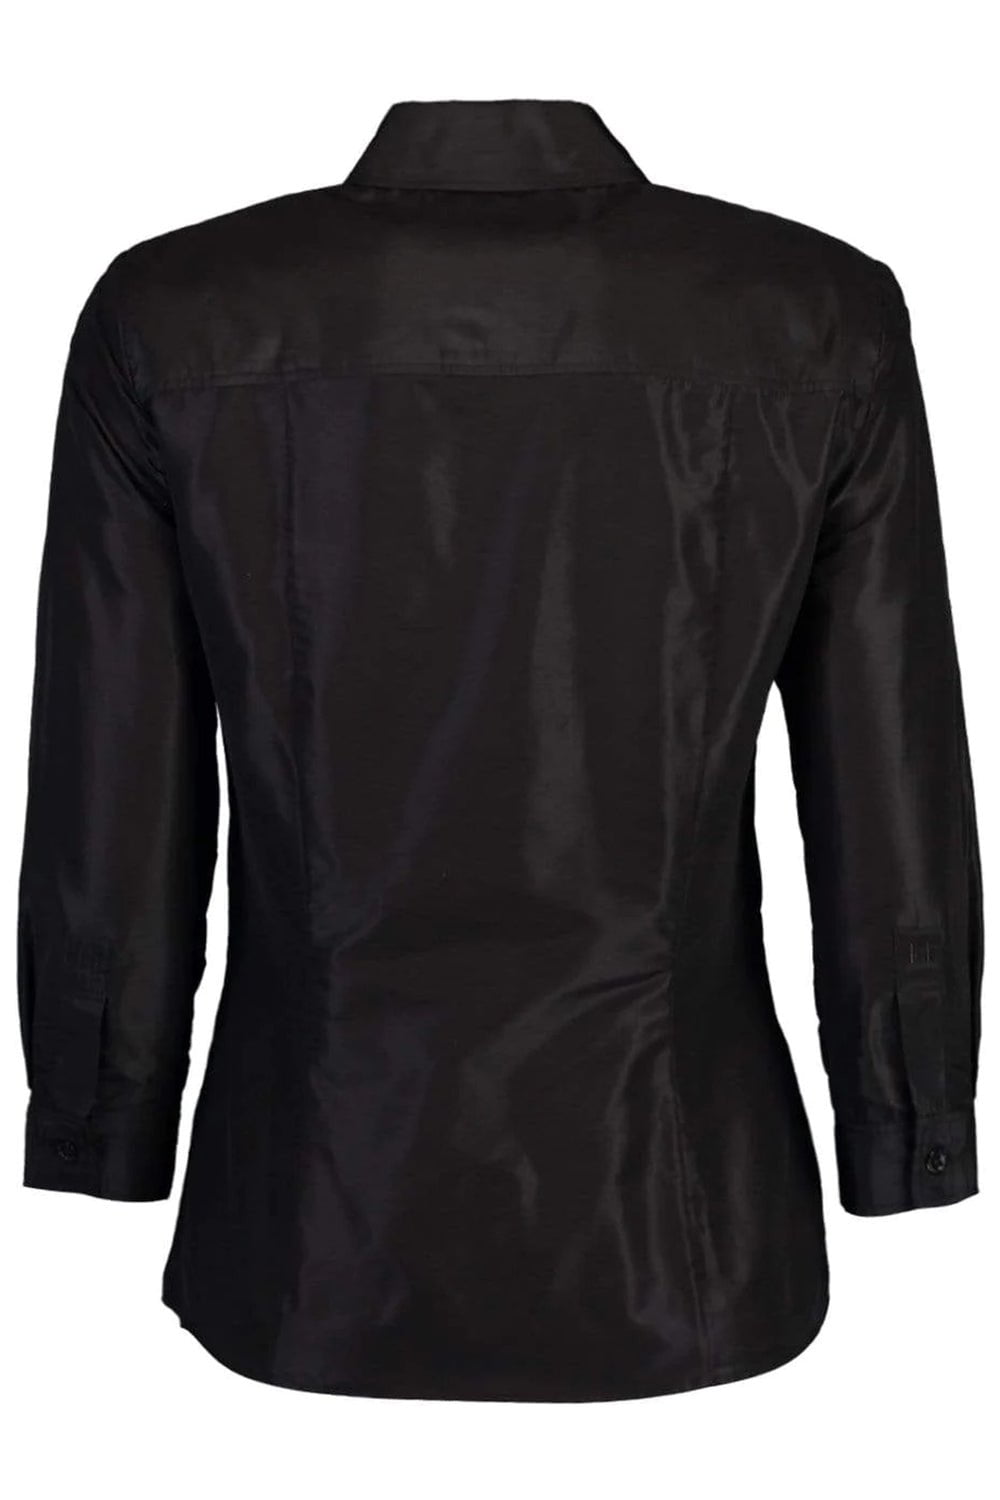 CAROLINA HERRERA-Silk Taffeta Collared Shirt - Black-